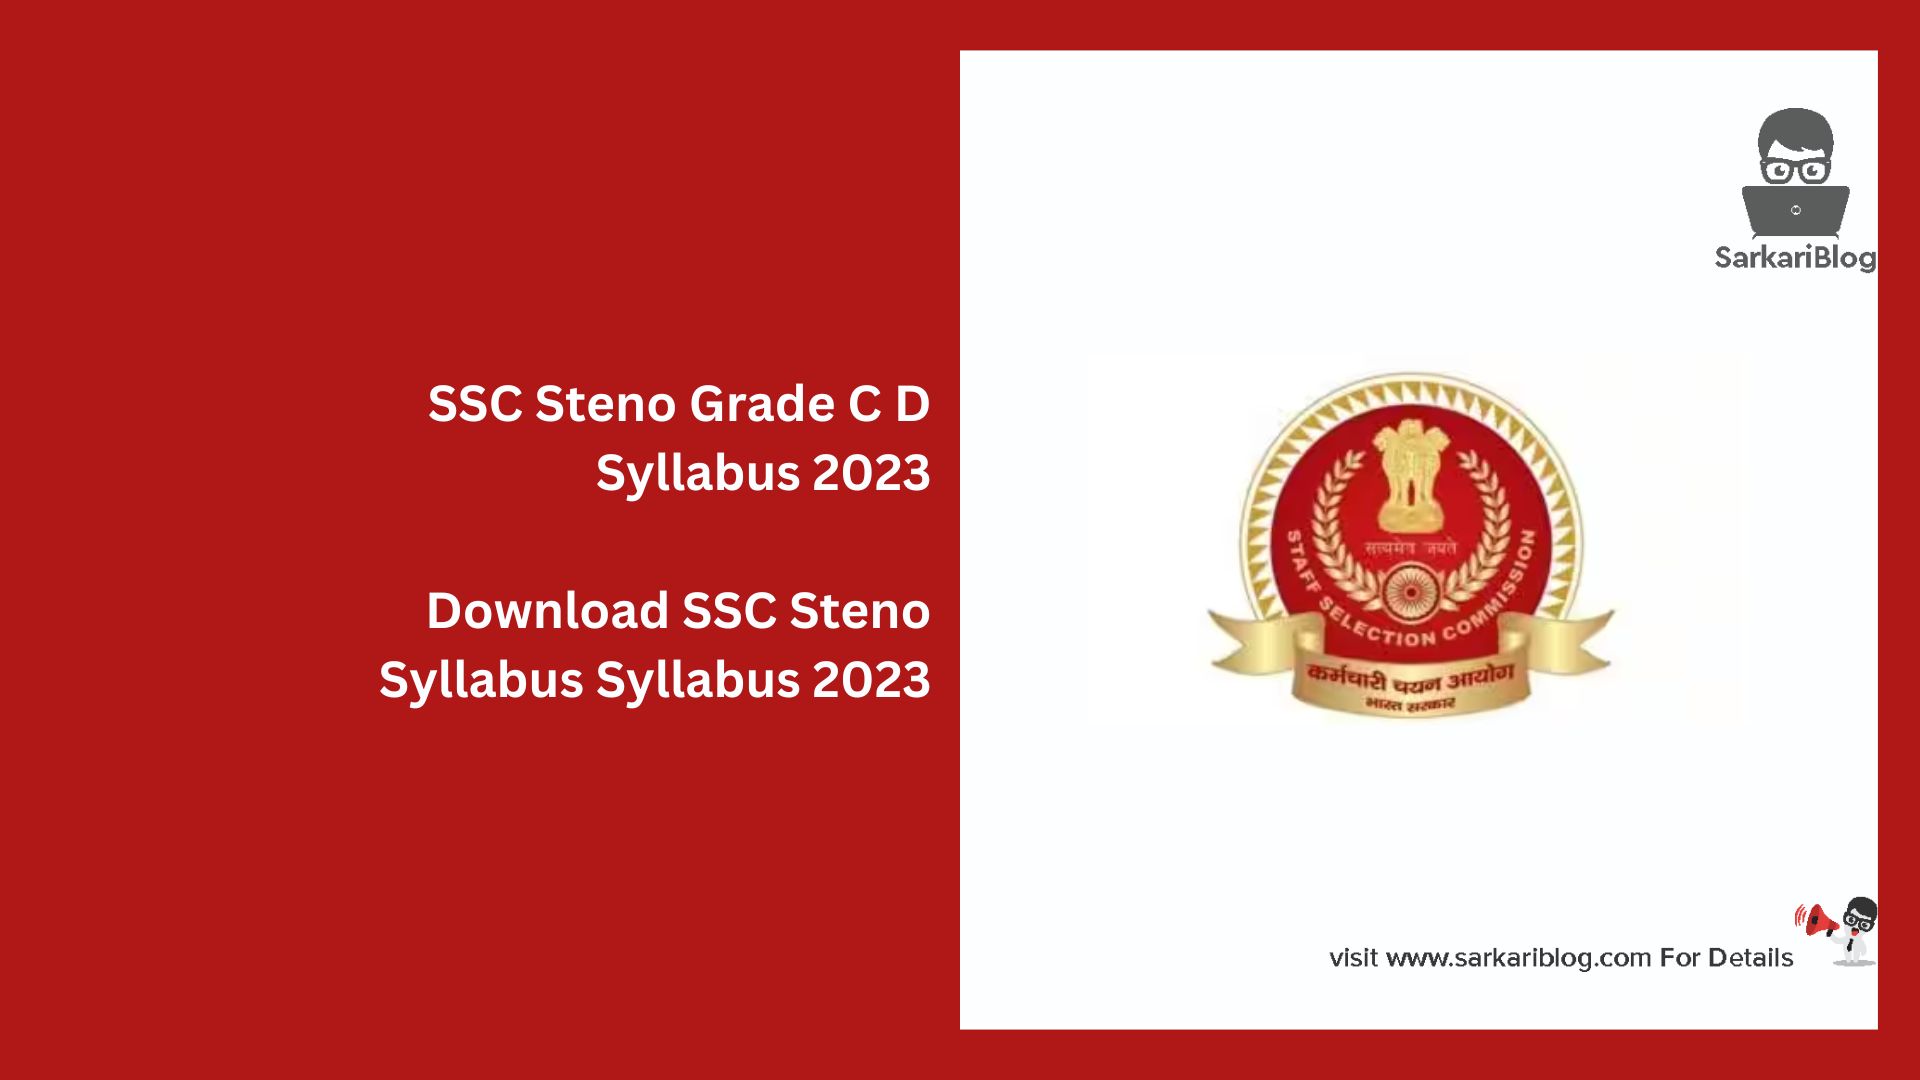 SSC Steno Grade C D Syllabus 2023